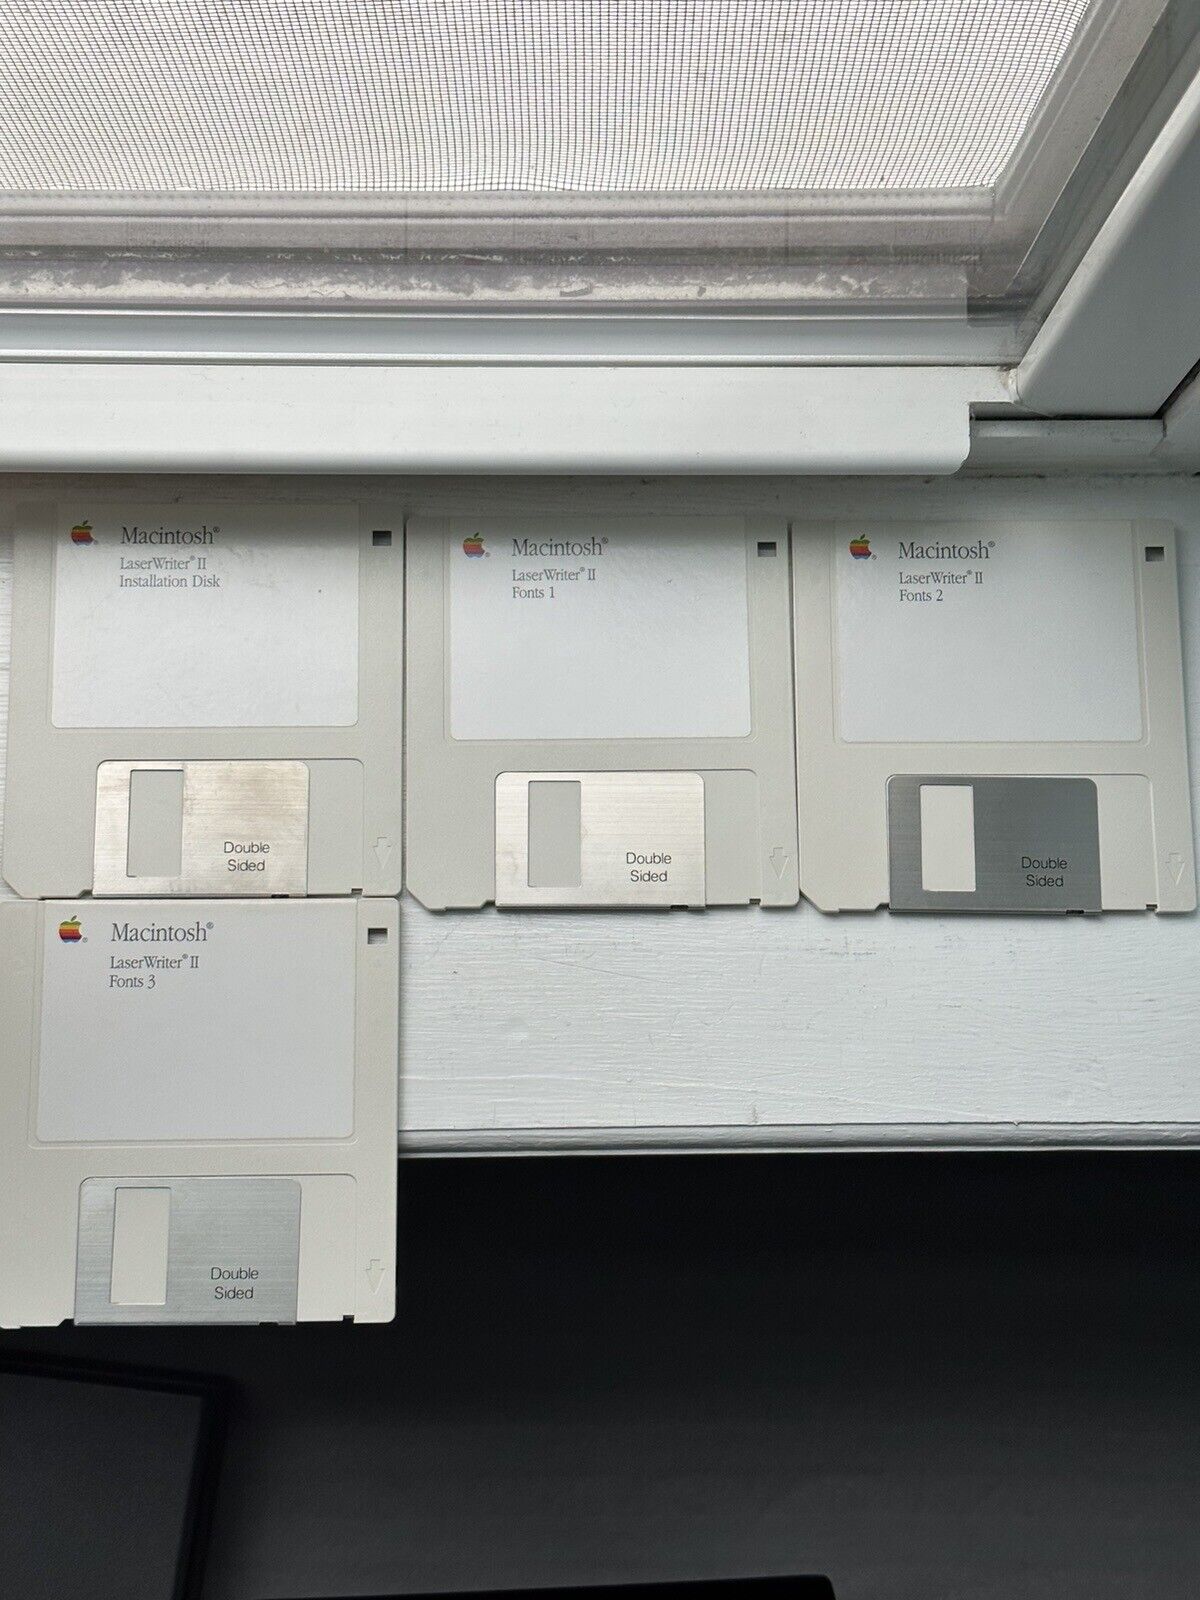 4 Apple Macintosh LaserWriter II 3.5 Floppy Disks, Installation, Fonts 1, 2 & 3